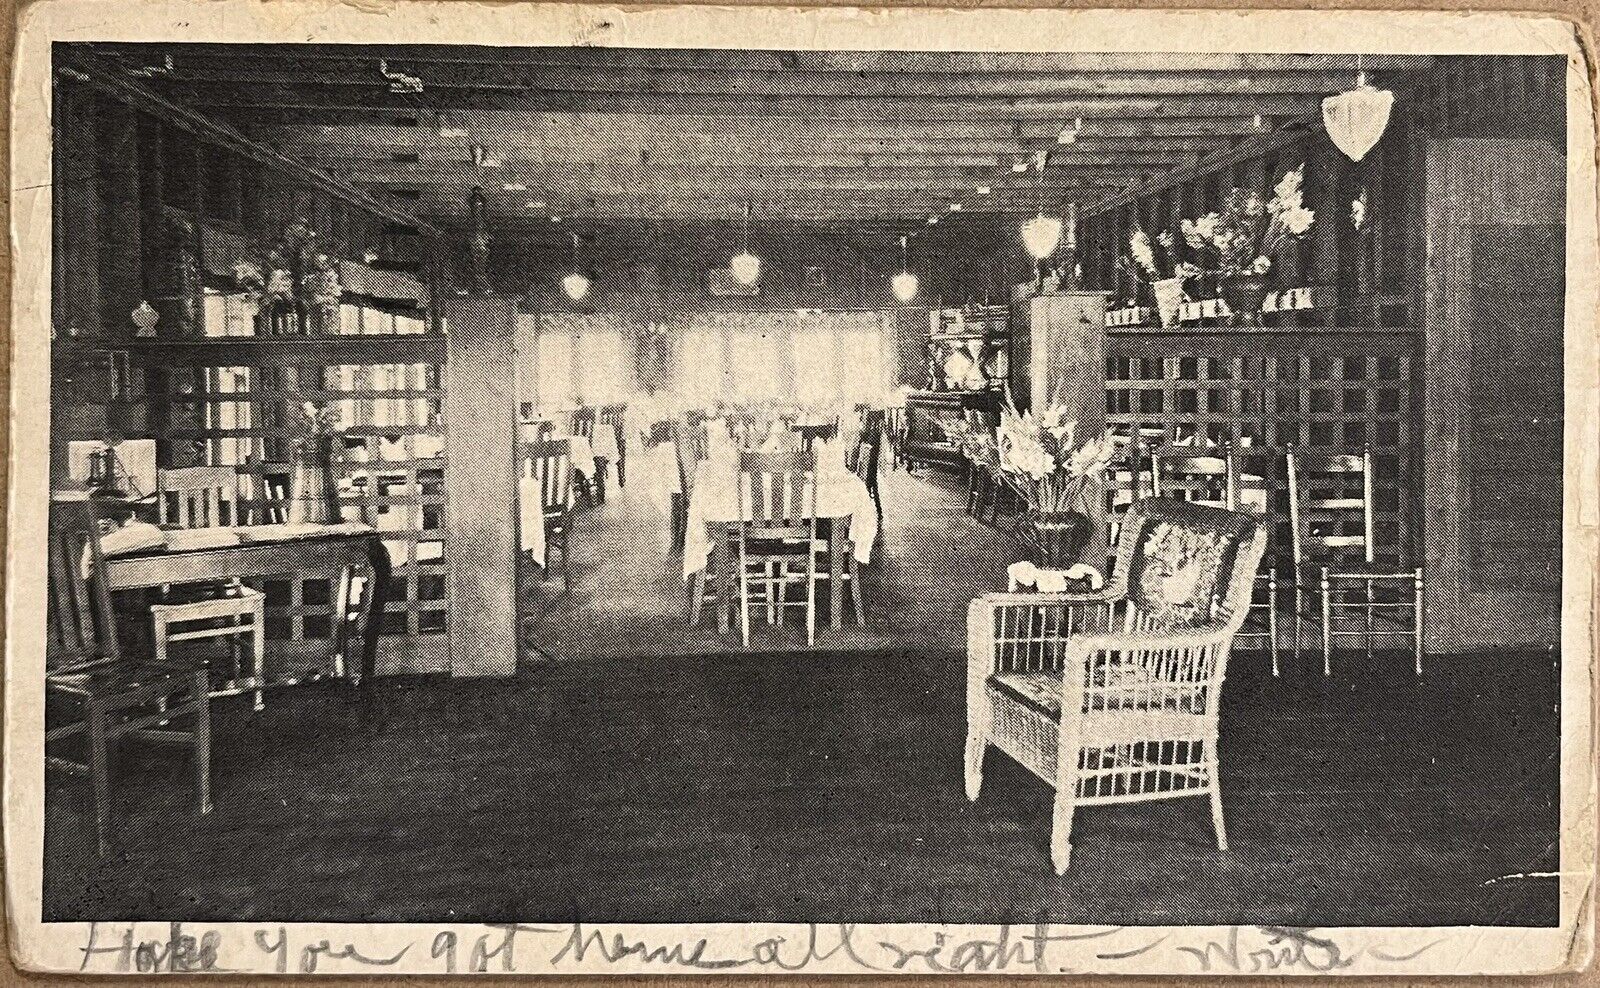 Yarmouth Maine Westcustogo Inn Restaurant Interior Antique Postcard c1920